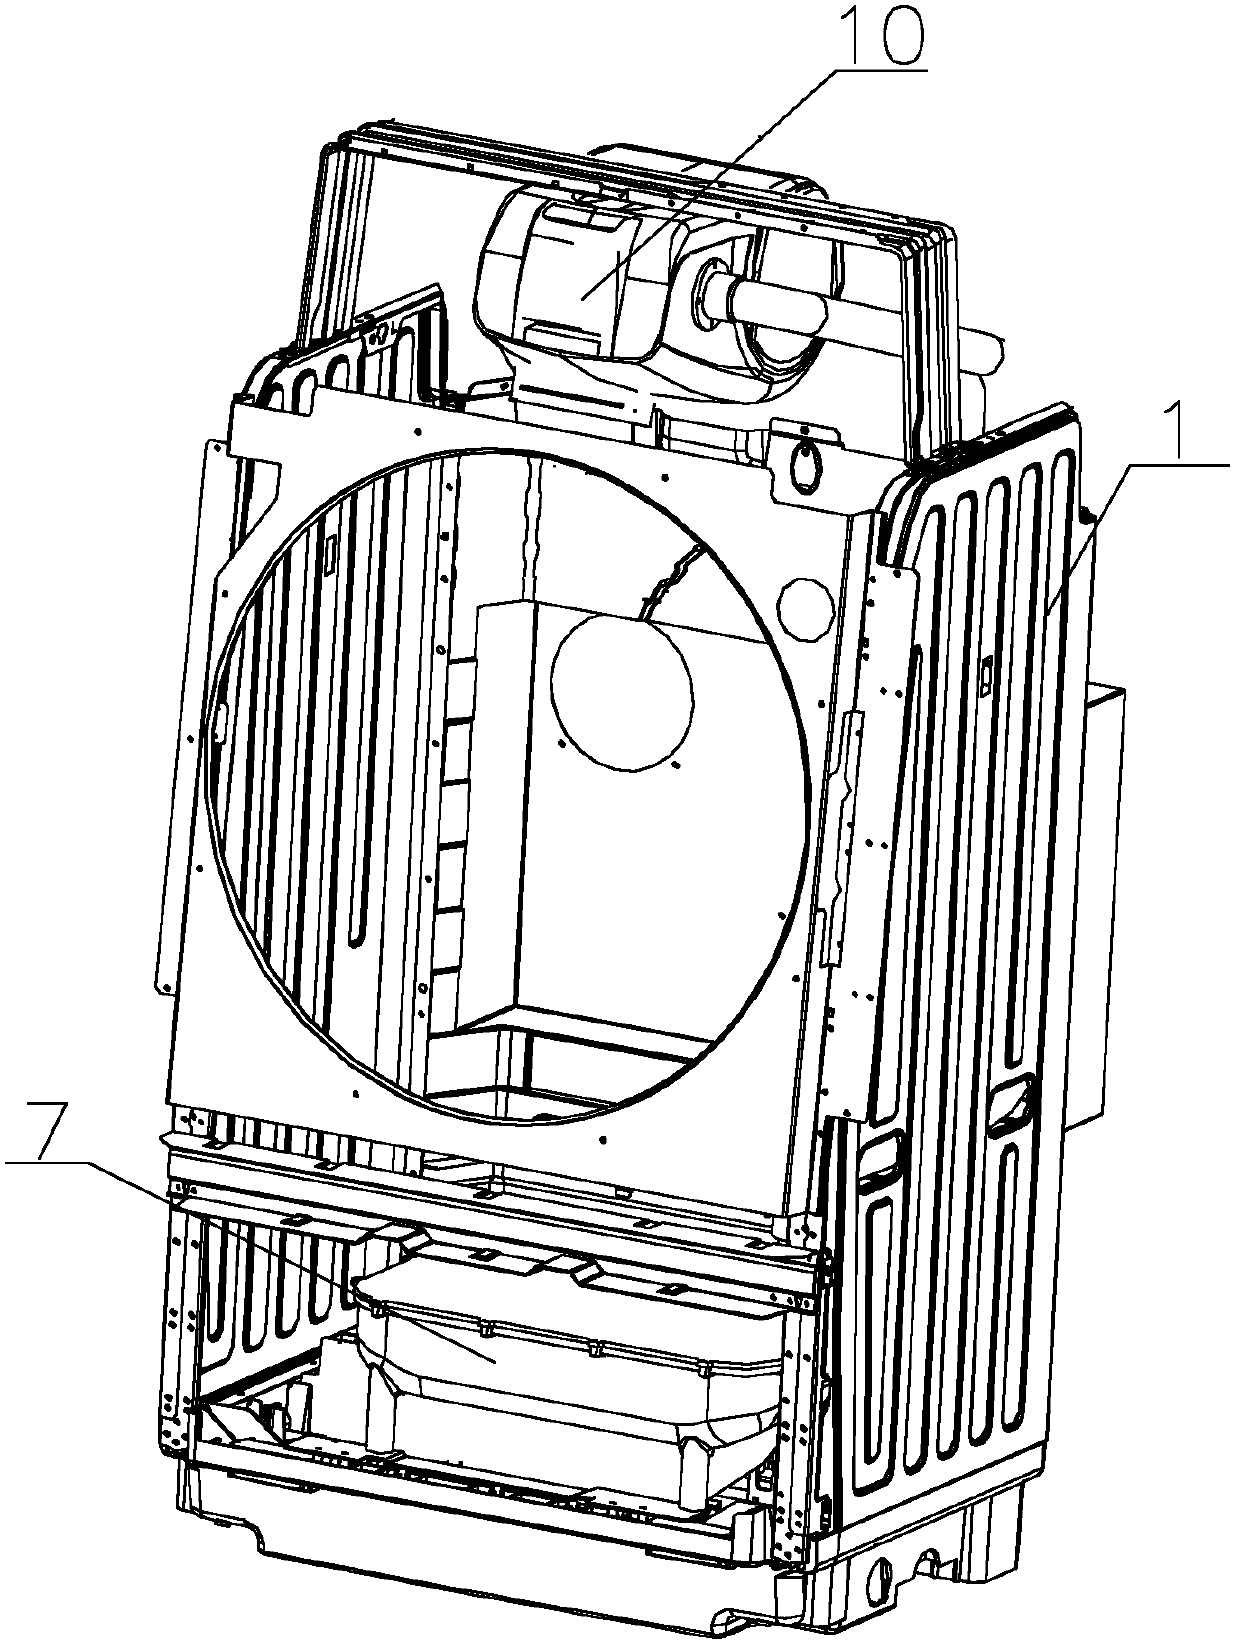 Suction device of washing machine and washing machine